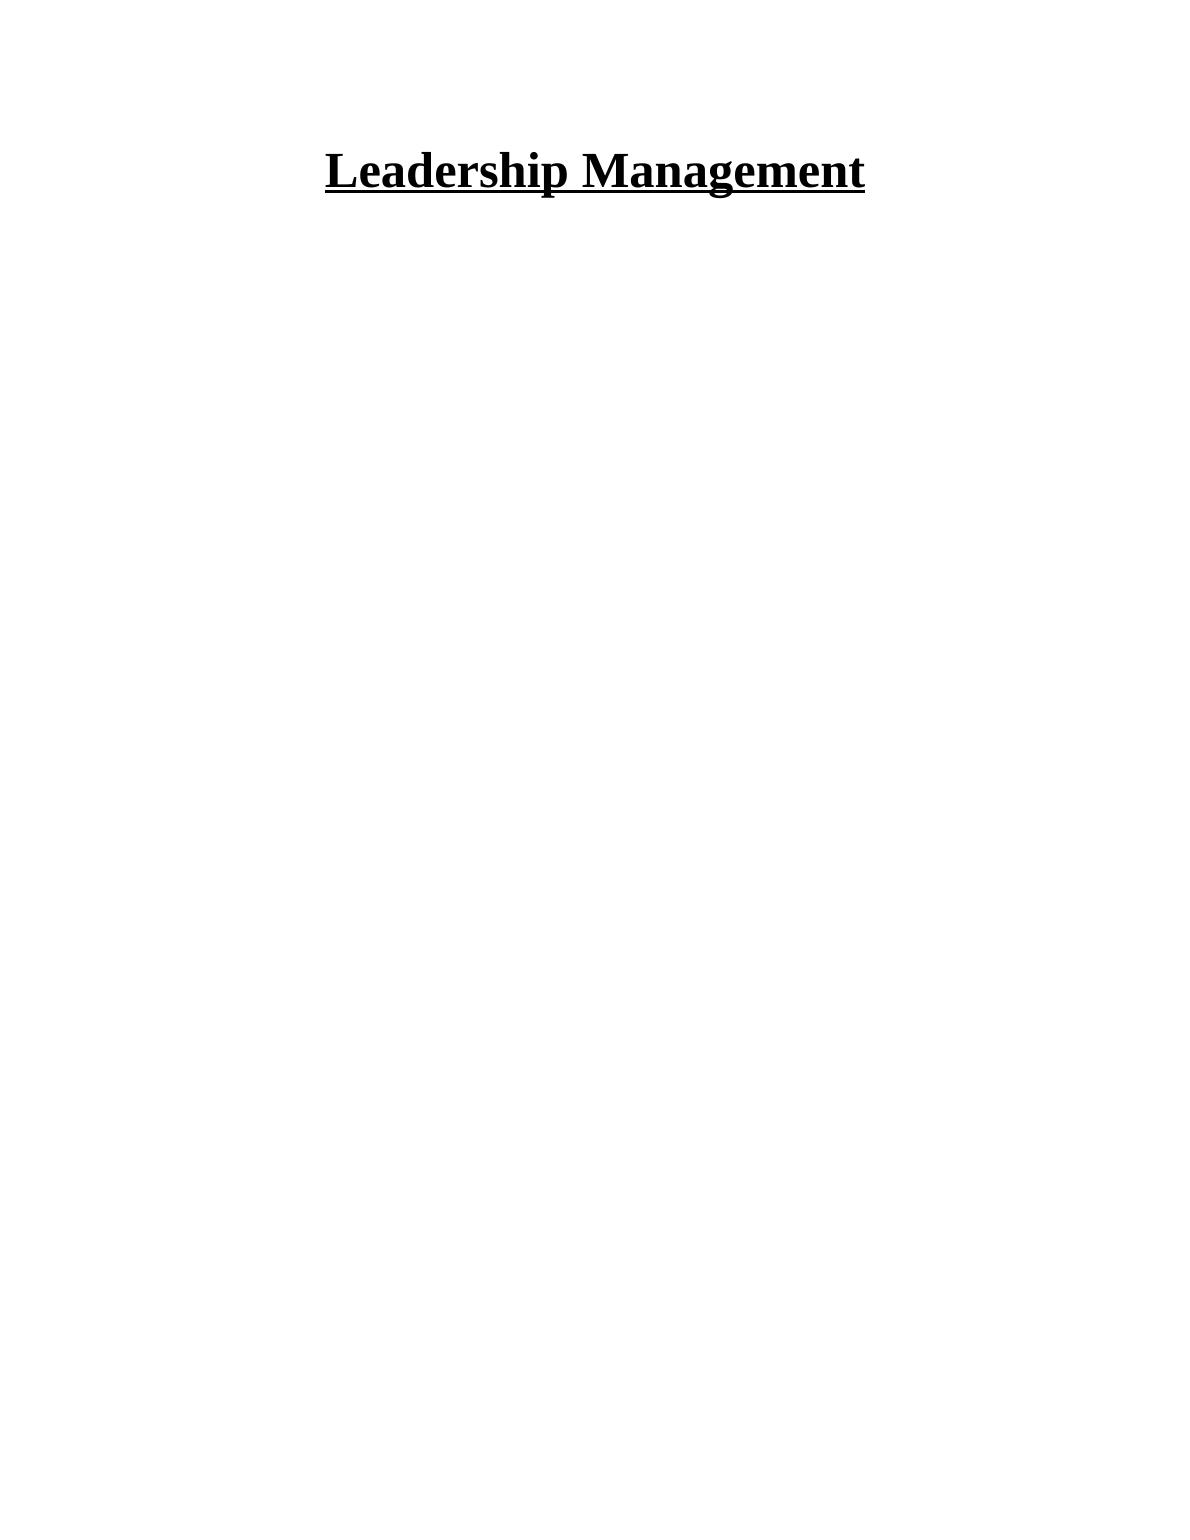 Leadership Management - Doc_1